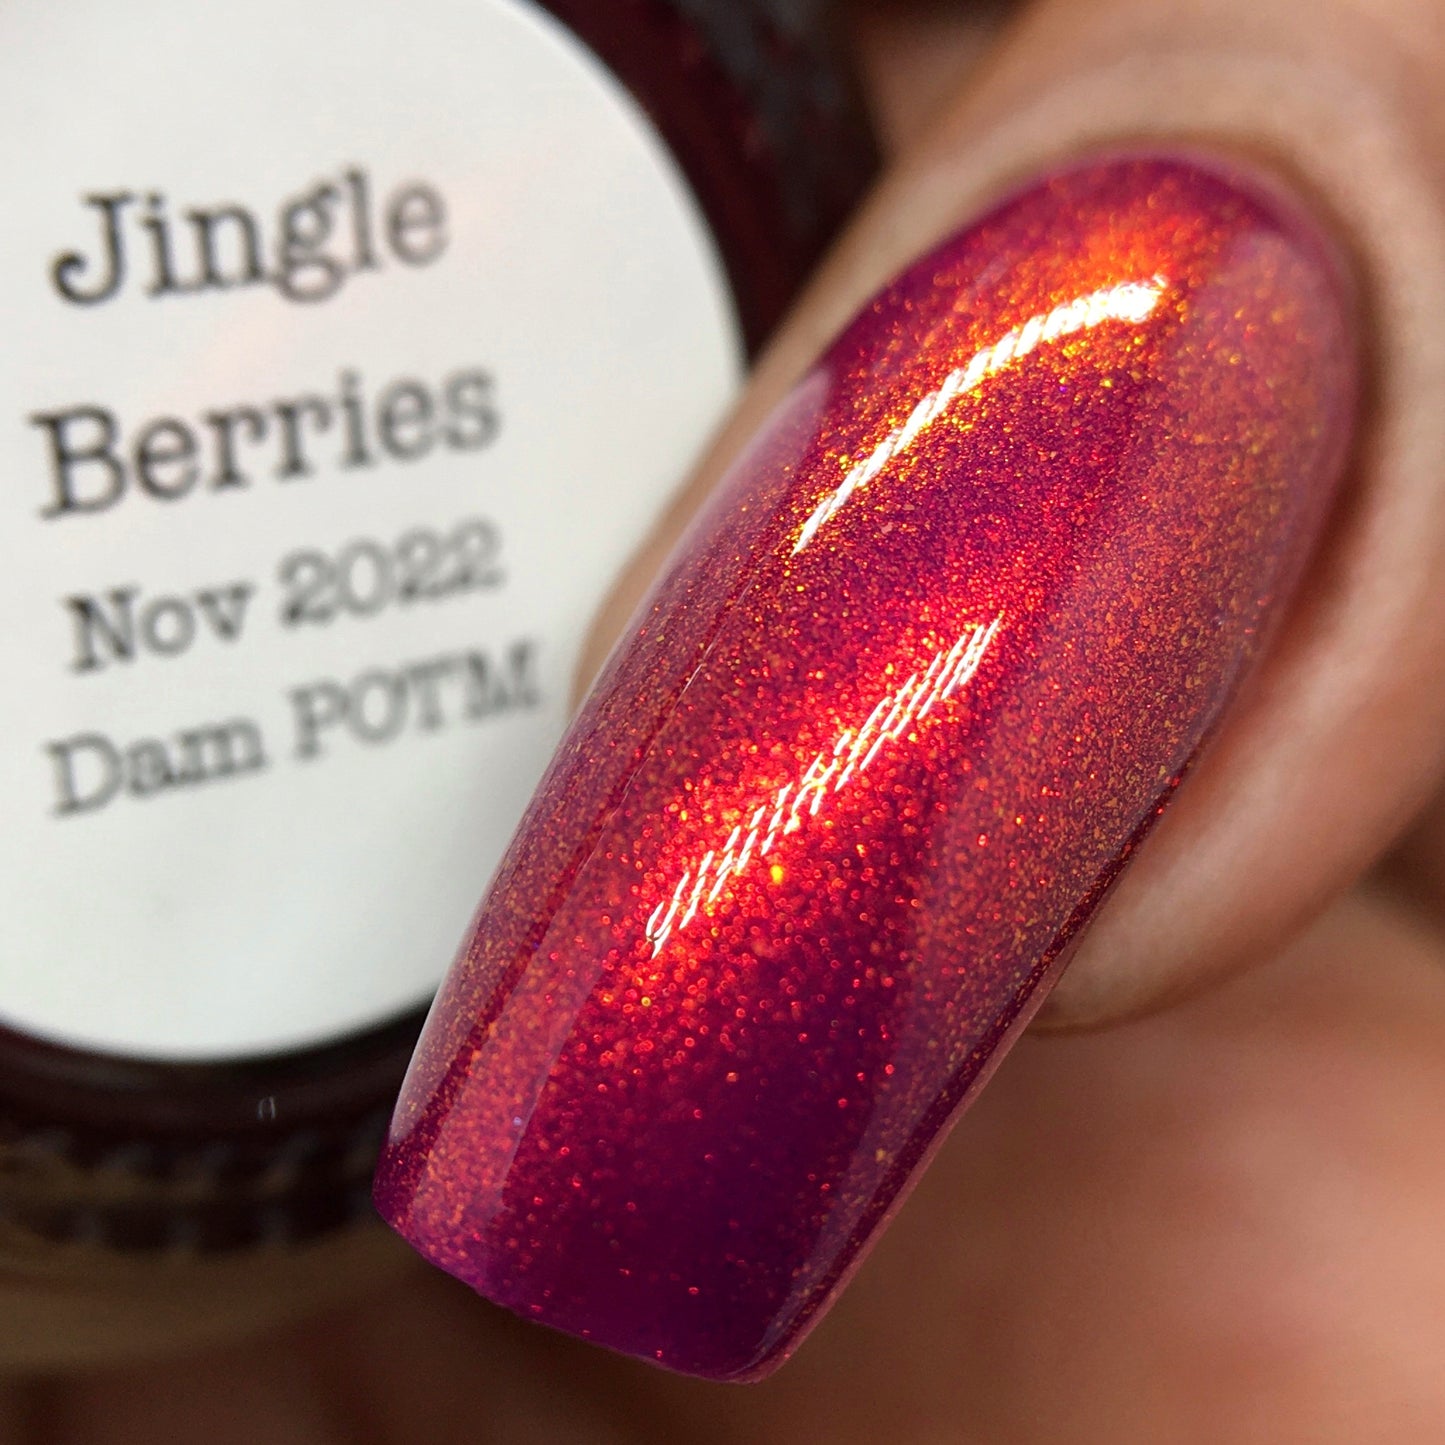 Jingle Berries - Red Shimmer Nail Polish - Nov 2022 Polish of the Month